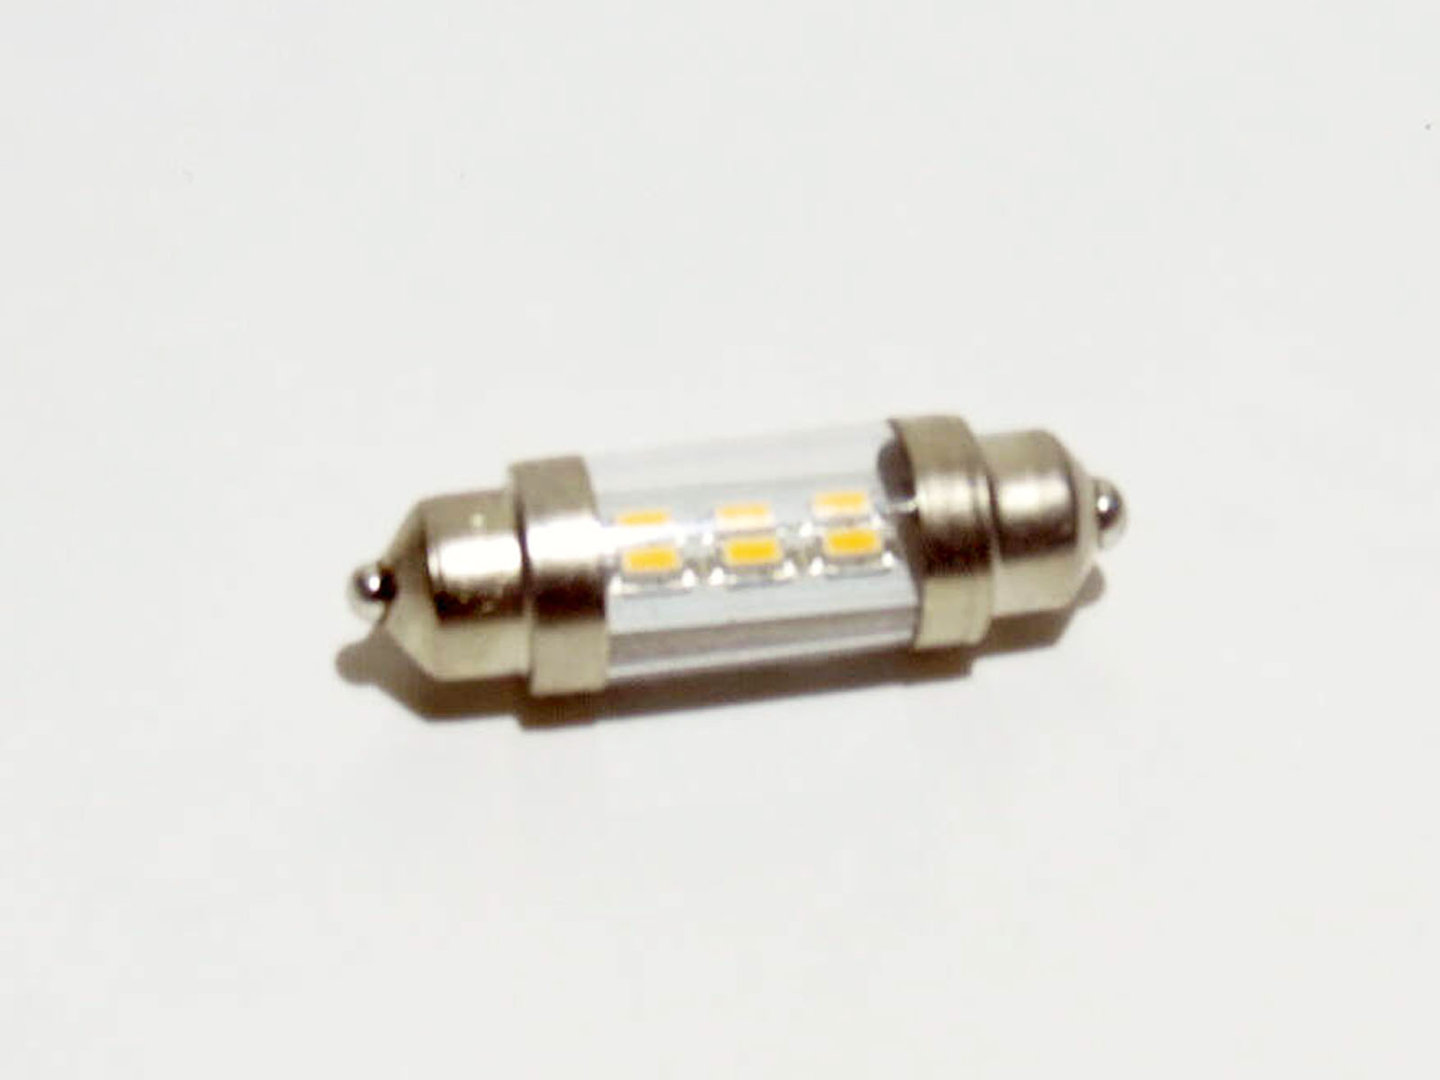 4stk LED POWER 36mm Soffitte Lampe warm weiss 6 5050 SMD Innenraum Deutsche Post 